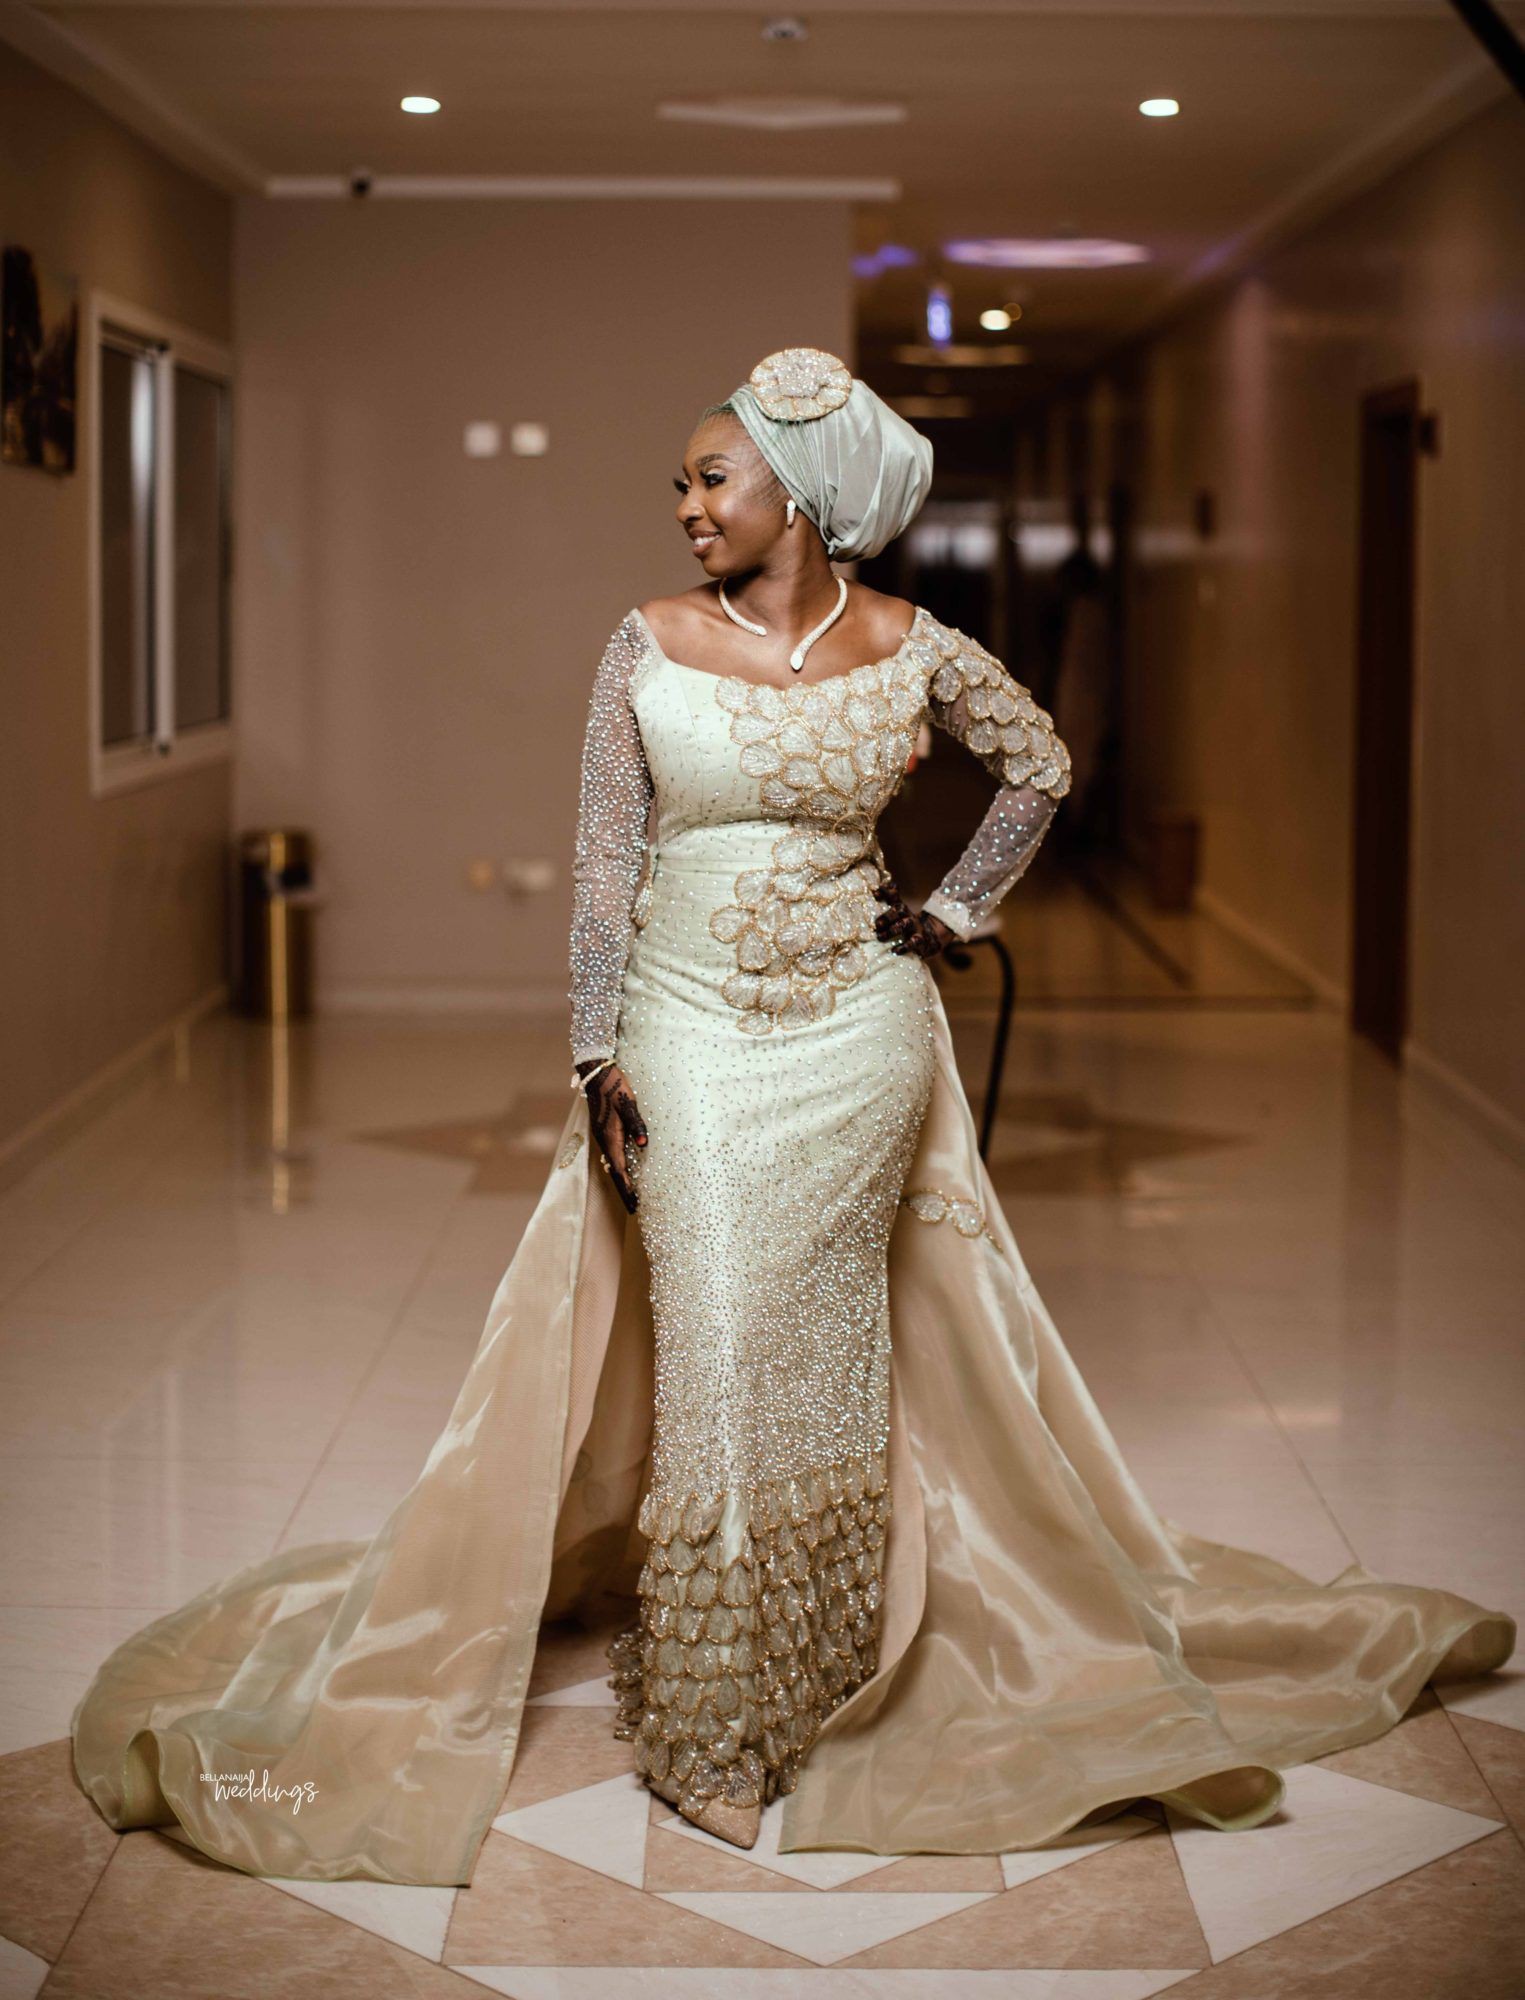 Vestidos nigerianos para novias nigerianas, Recepción de bodas y Vestido de novia: Vestido de novia,  Recepción de la boda,  Alta costura,  dos piezas,  Sesión de fotos,  vestidos nigerianos  